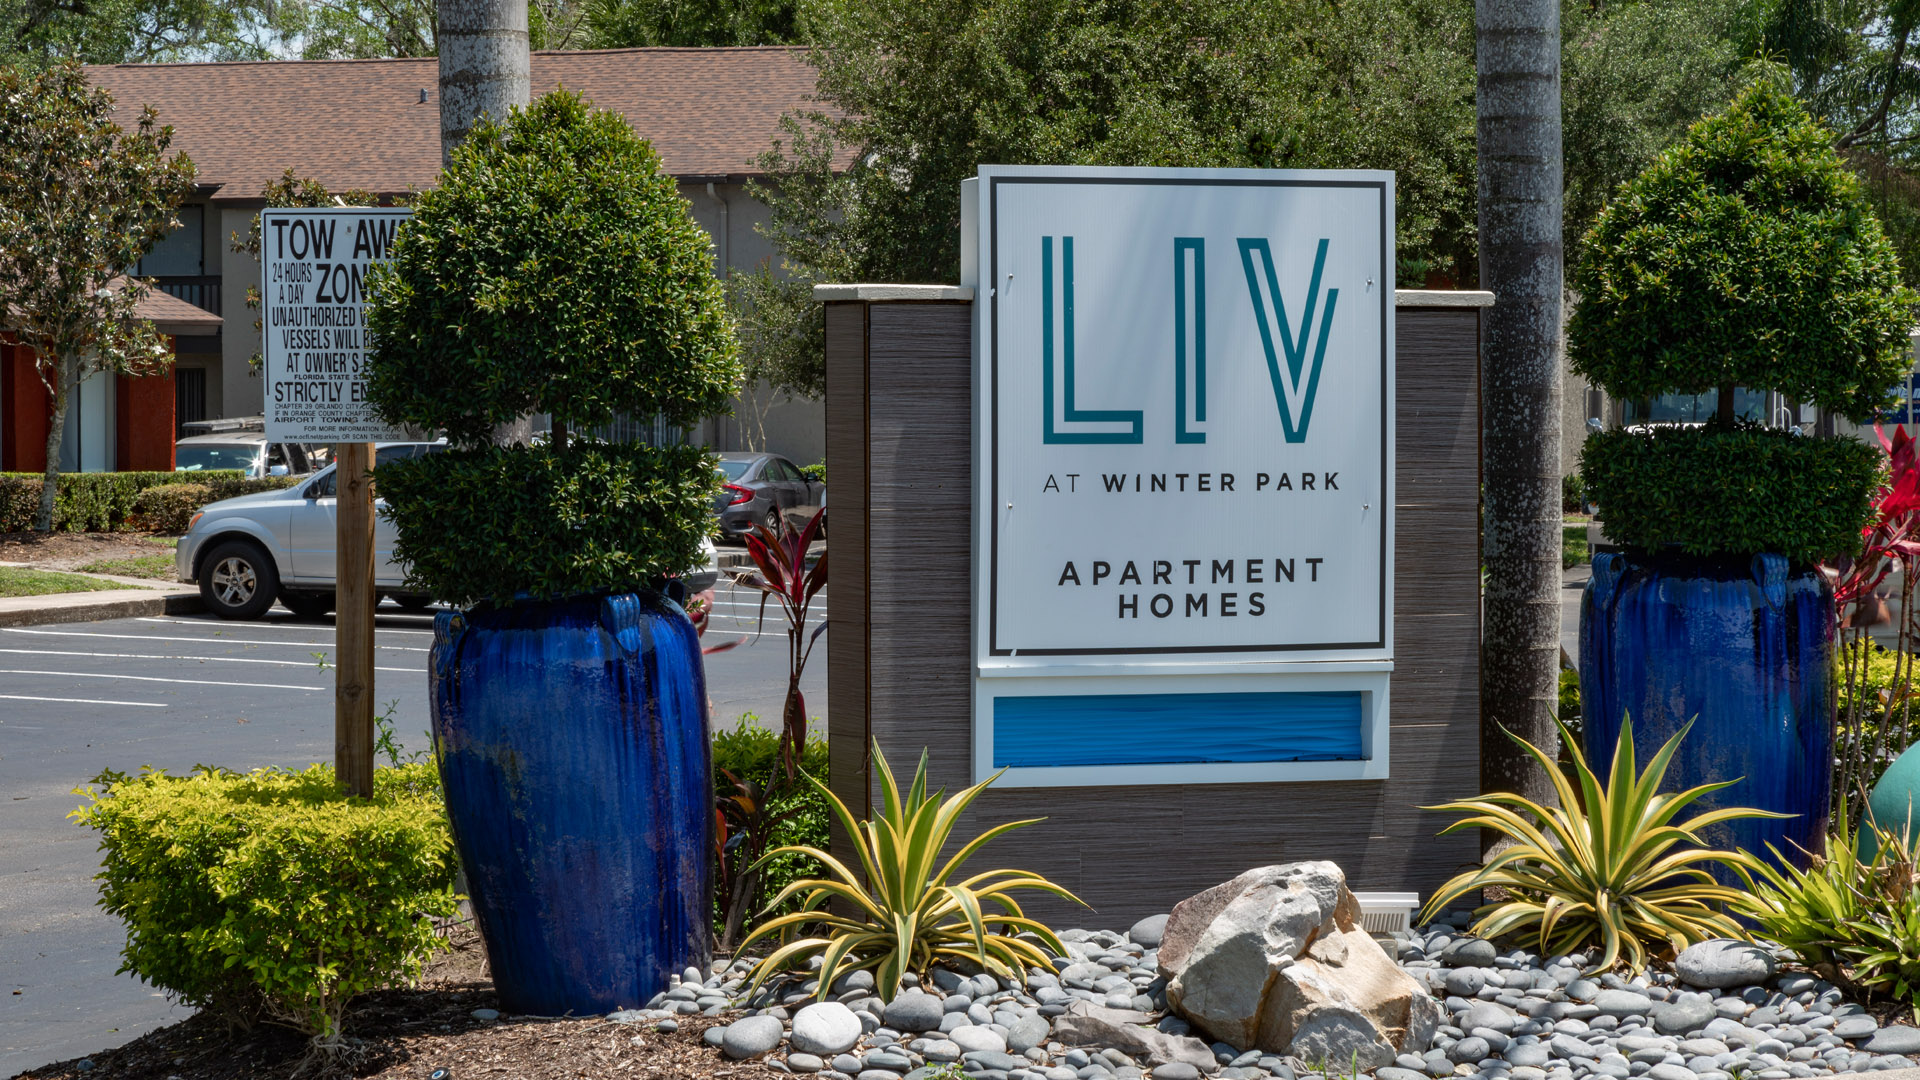 Liv at Winter Park apartment homes signage